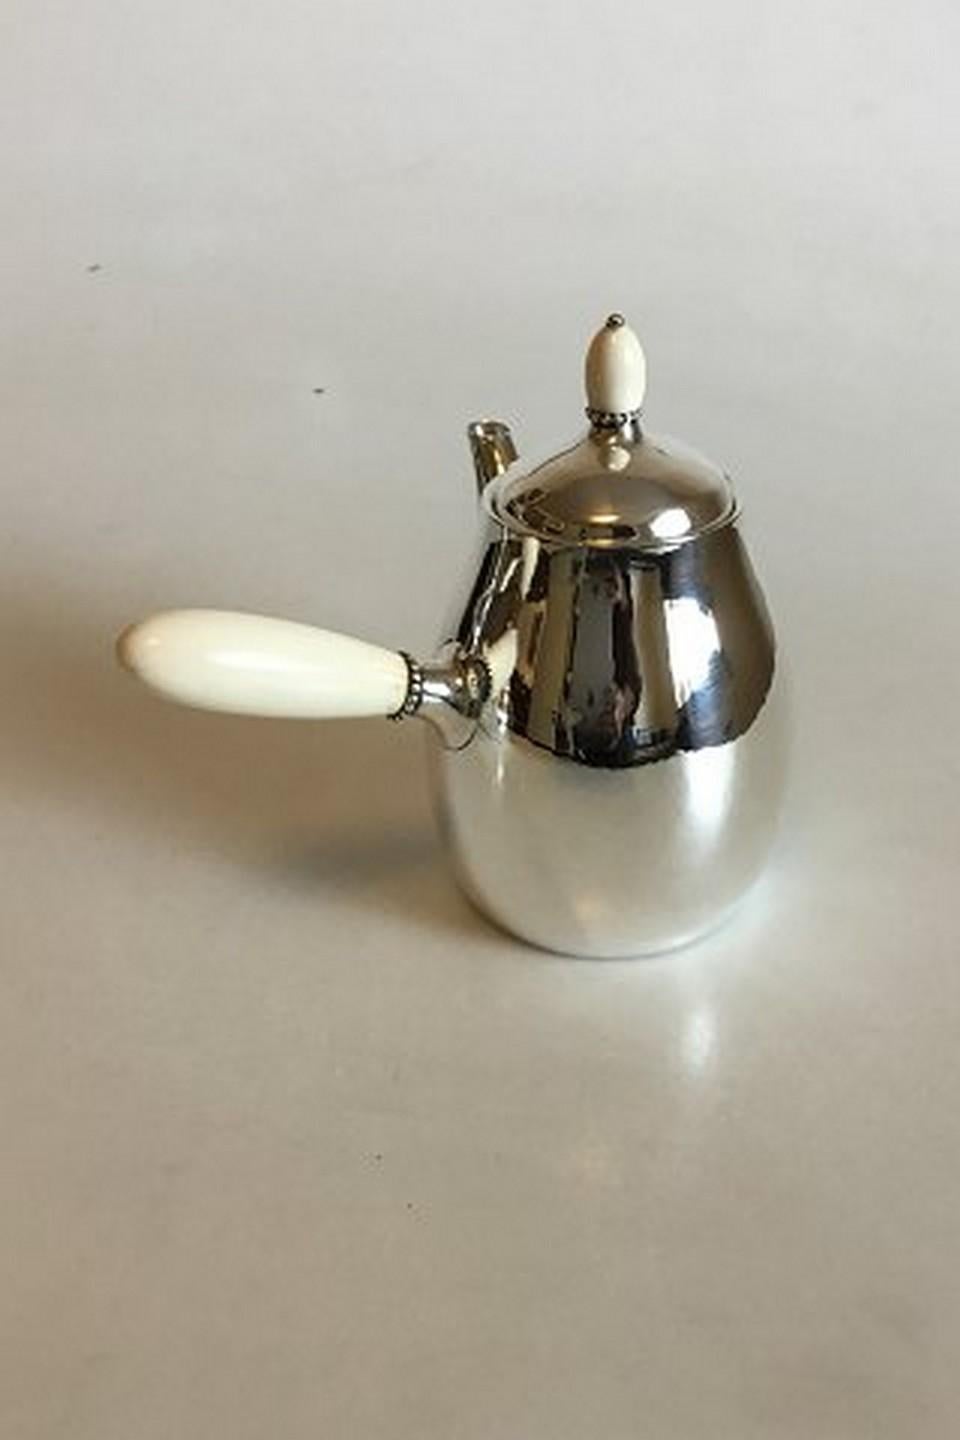 Georg Jensen sterling silver coffee pot no 80C. Måler 15 cm / 5 29/32 in. Weighs 302 g / 10.65 oz.
Item no.: 374174.